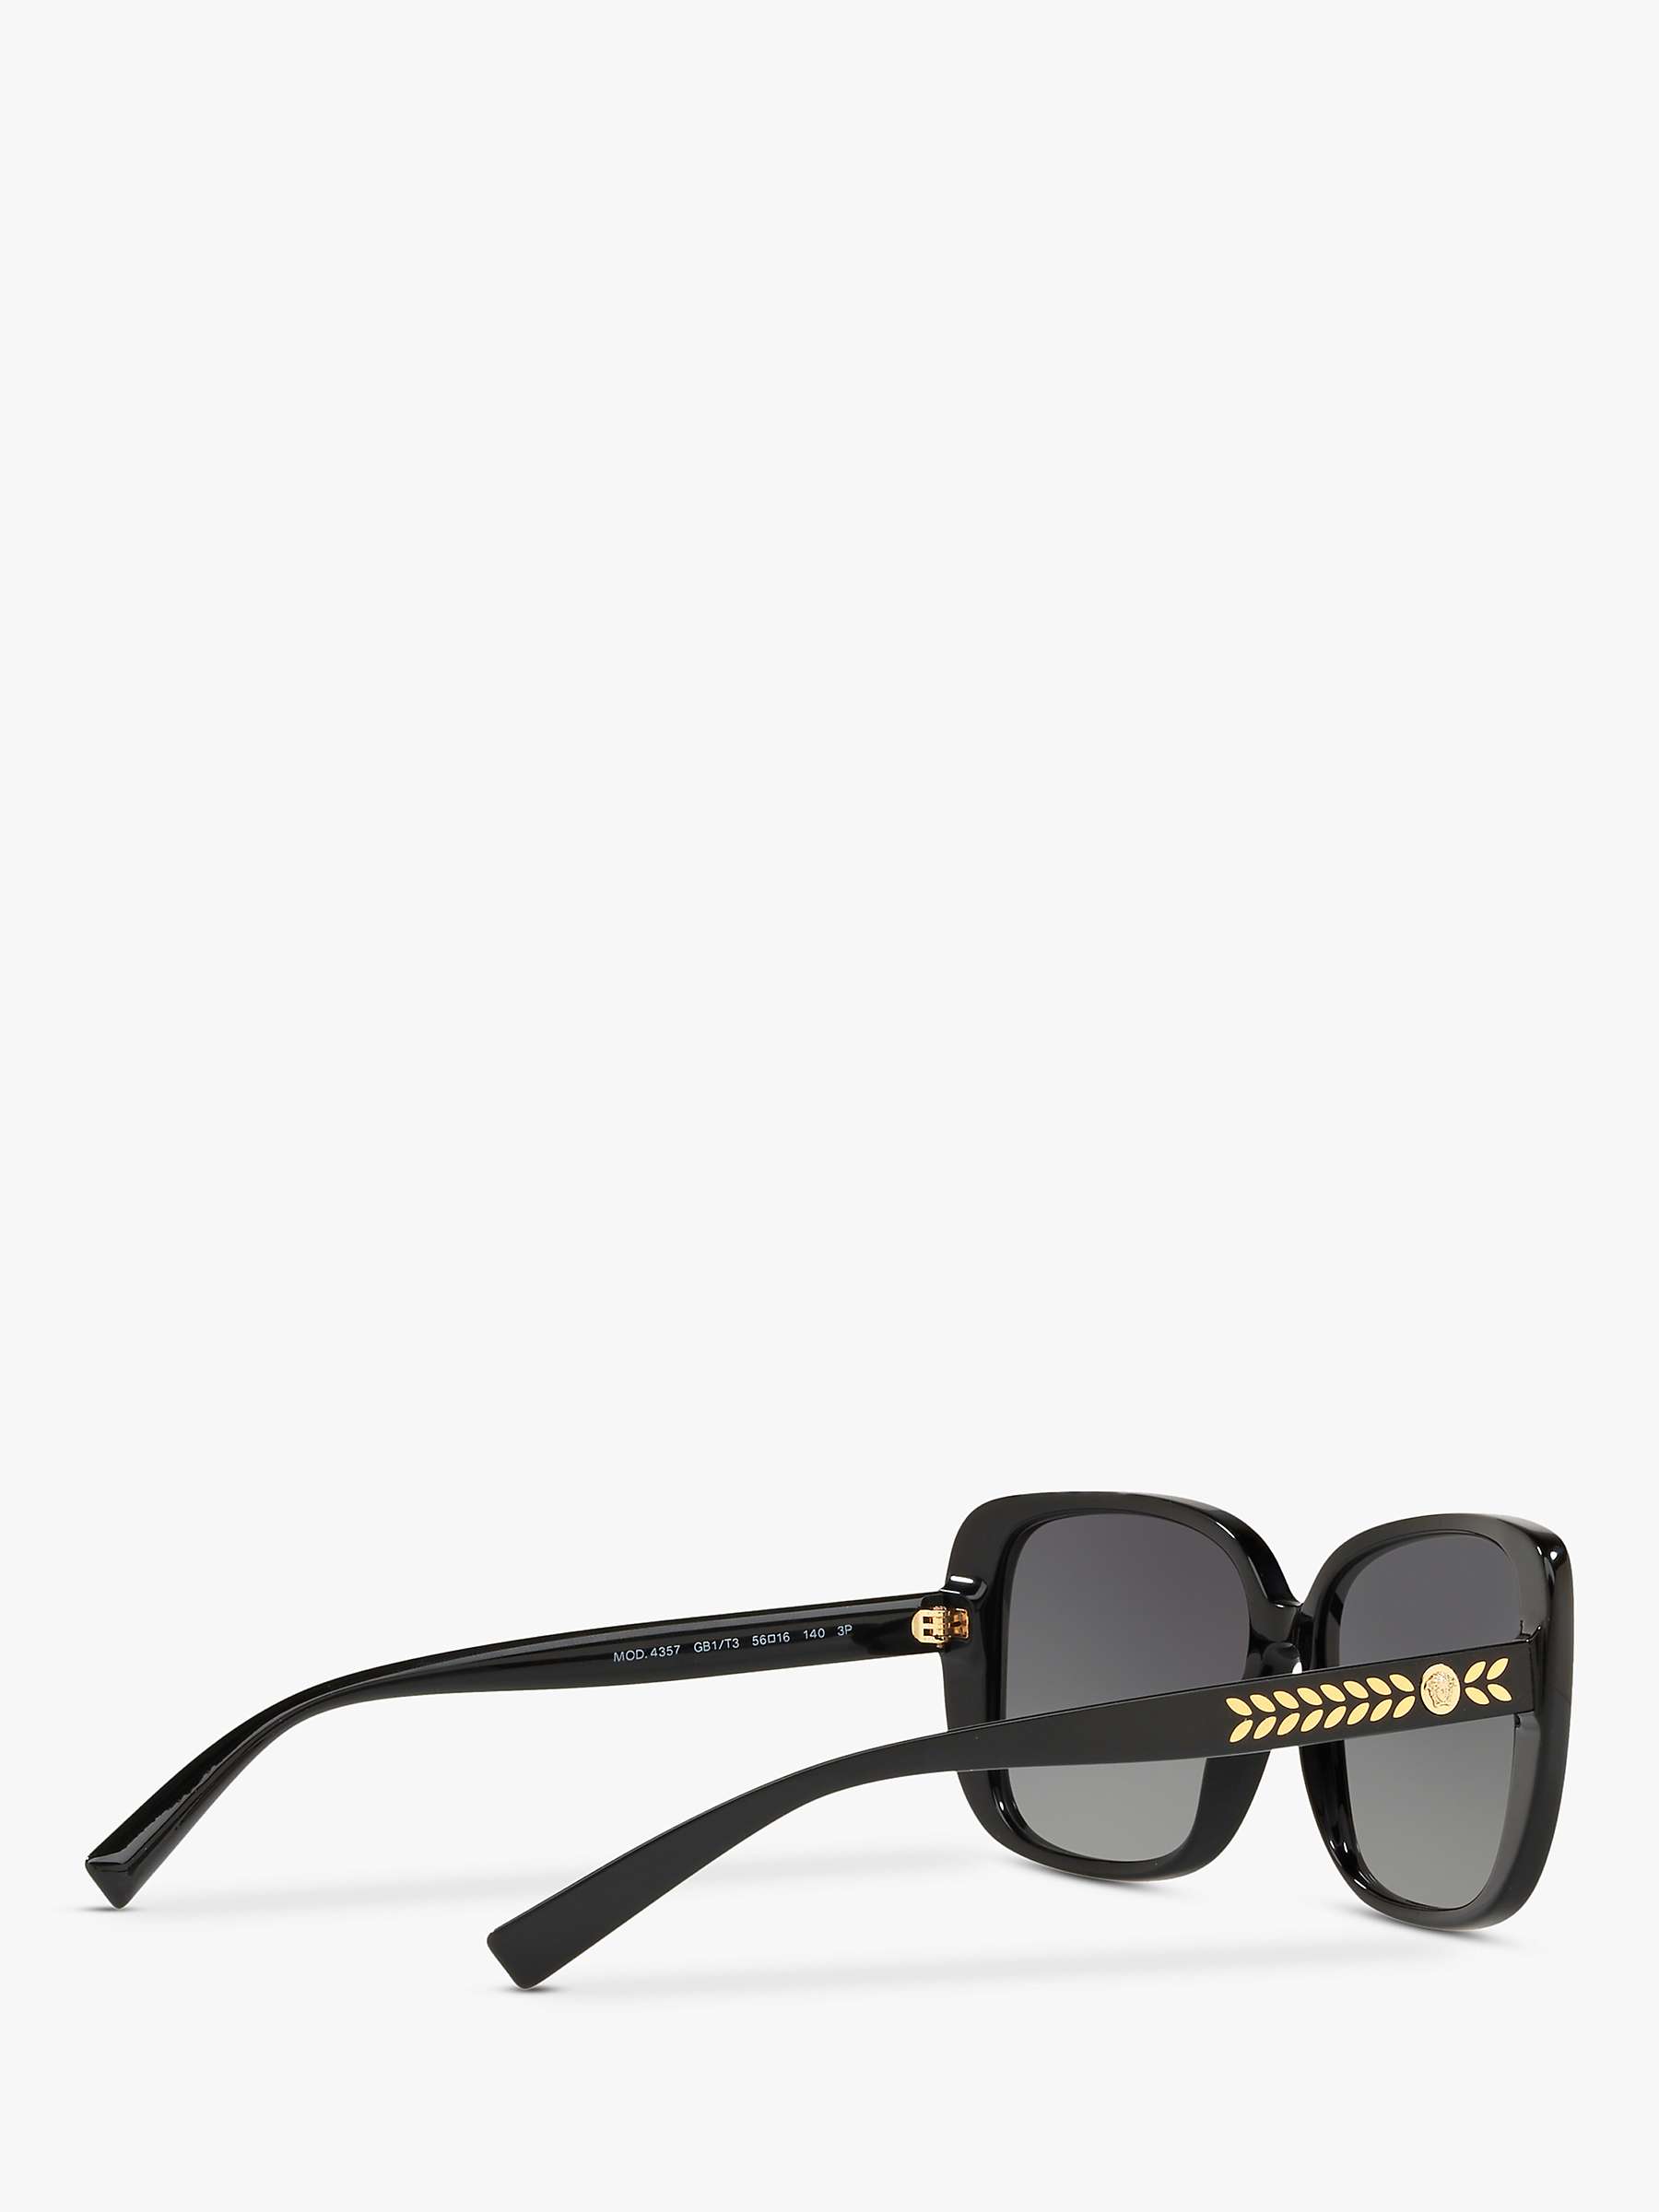 Buy Versace VE4357 Women's Polarised Square Sunglasses, Black/Grey Gradient Online at johnlewis.com